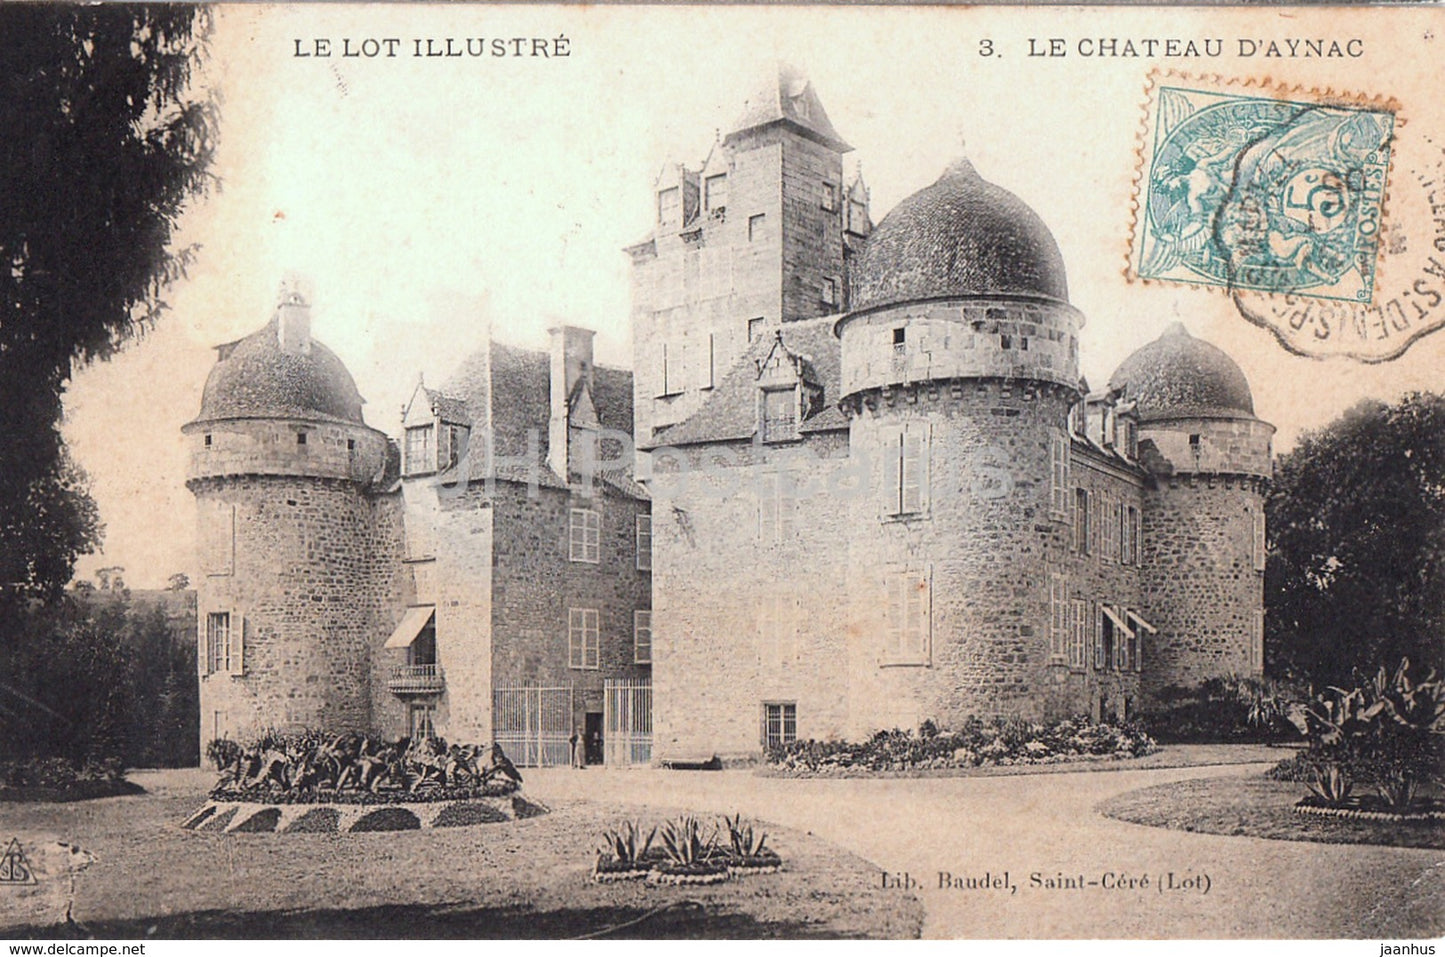 Le Lot Illustre - Le Chateau D'Aynac - castle - 3 - old postcard - 1905 - France - used - JH Postcards